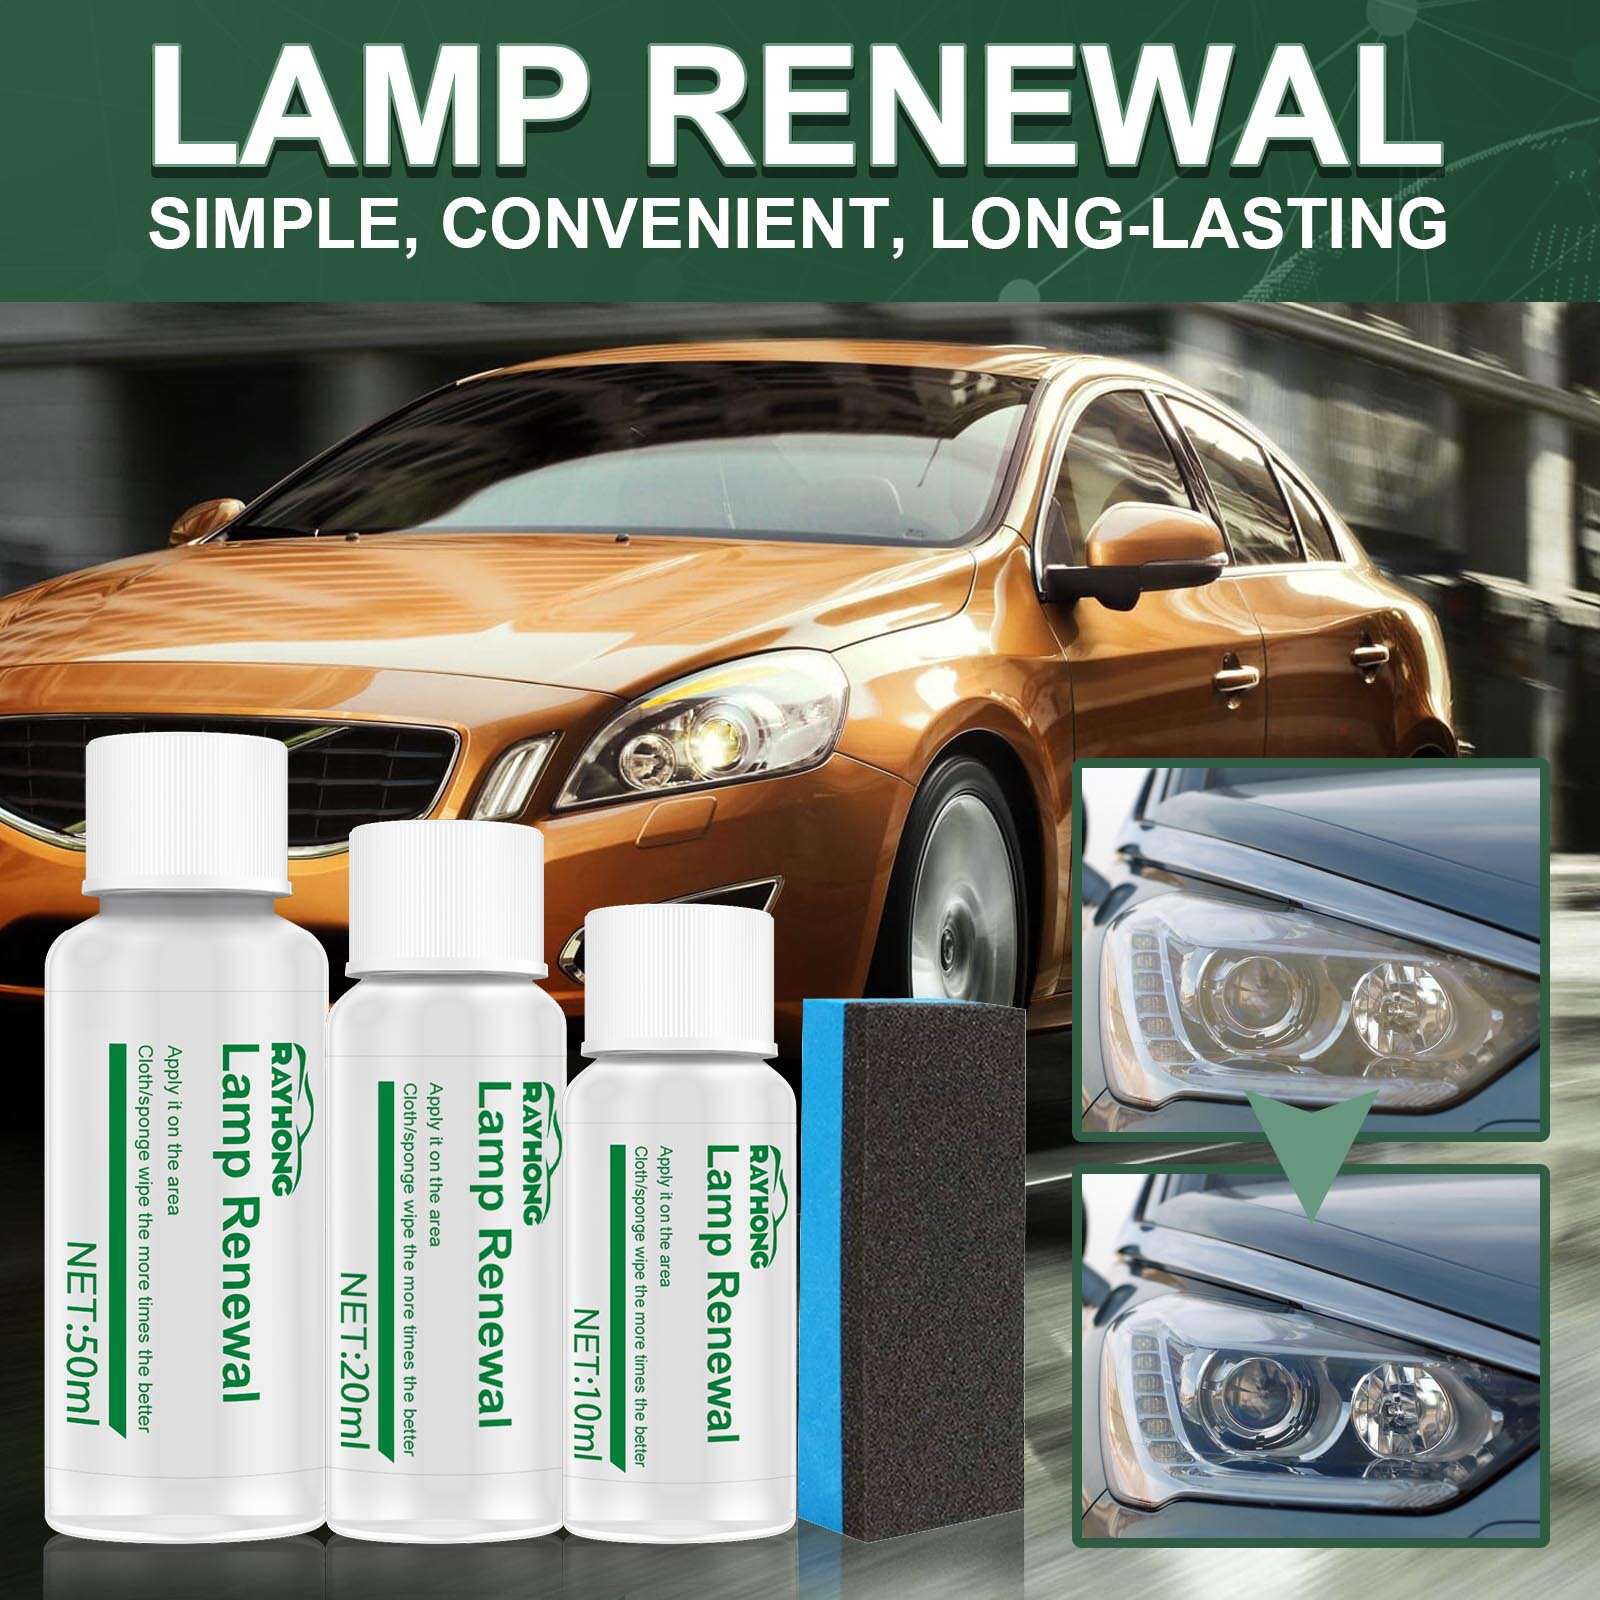 10ml/ 20ml/ 50ml Car Headlight Repair Liquid Car Headlight Cleaning Fluid  Repair Refurbishment Fluid Detergent Car Light Cleaner